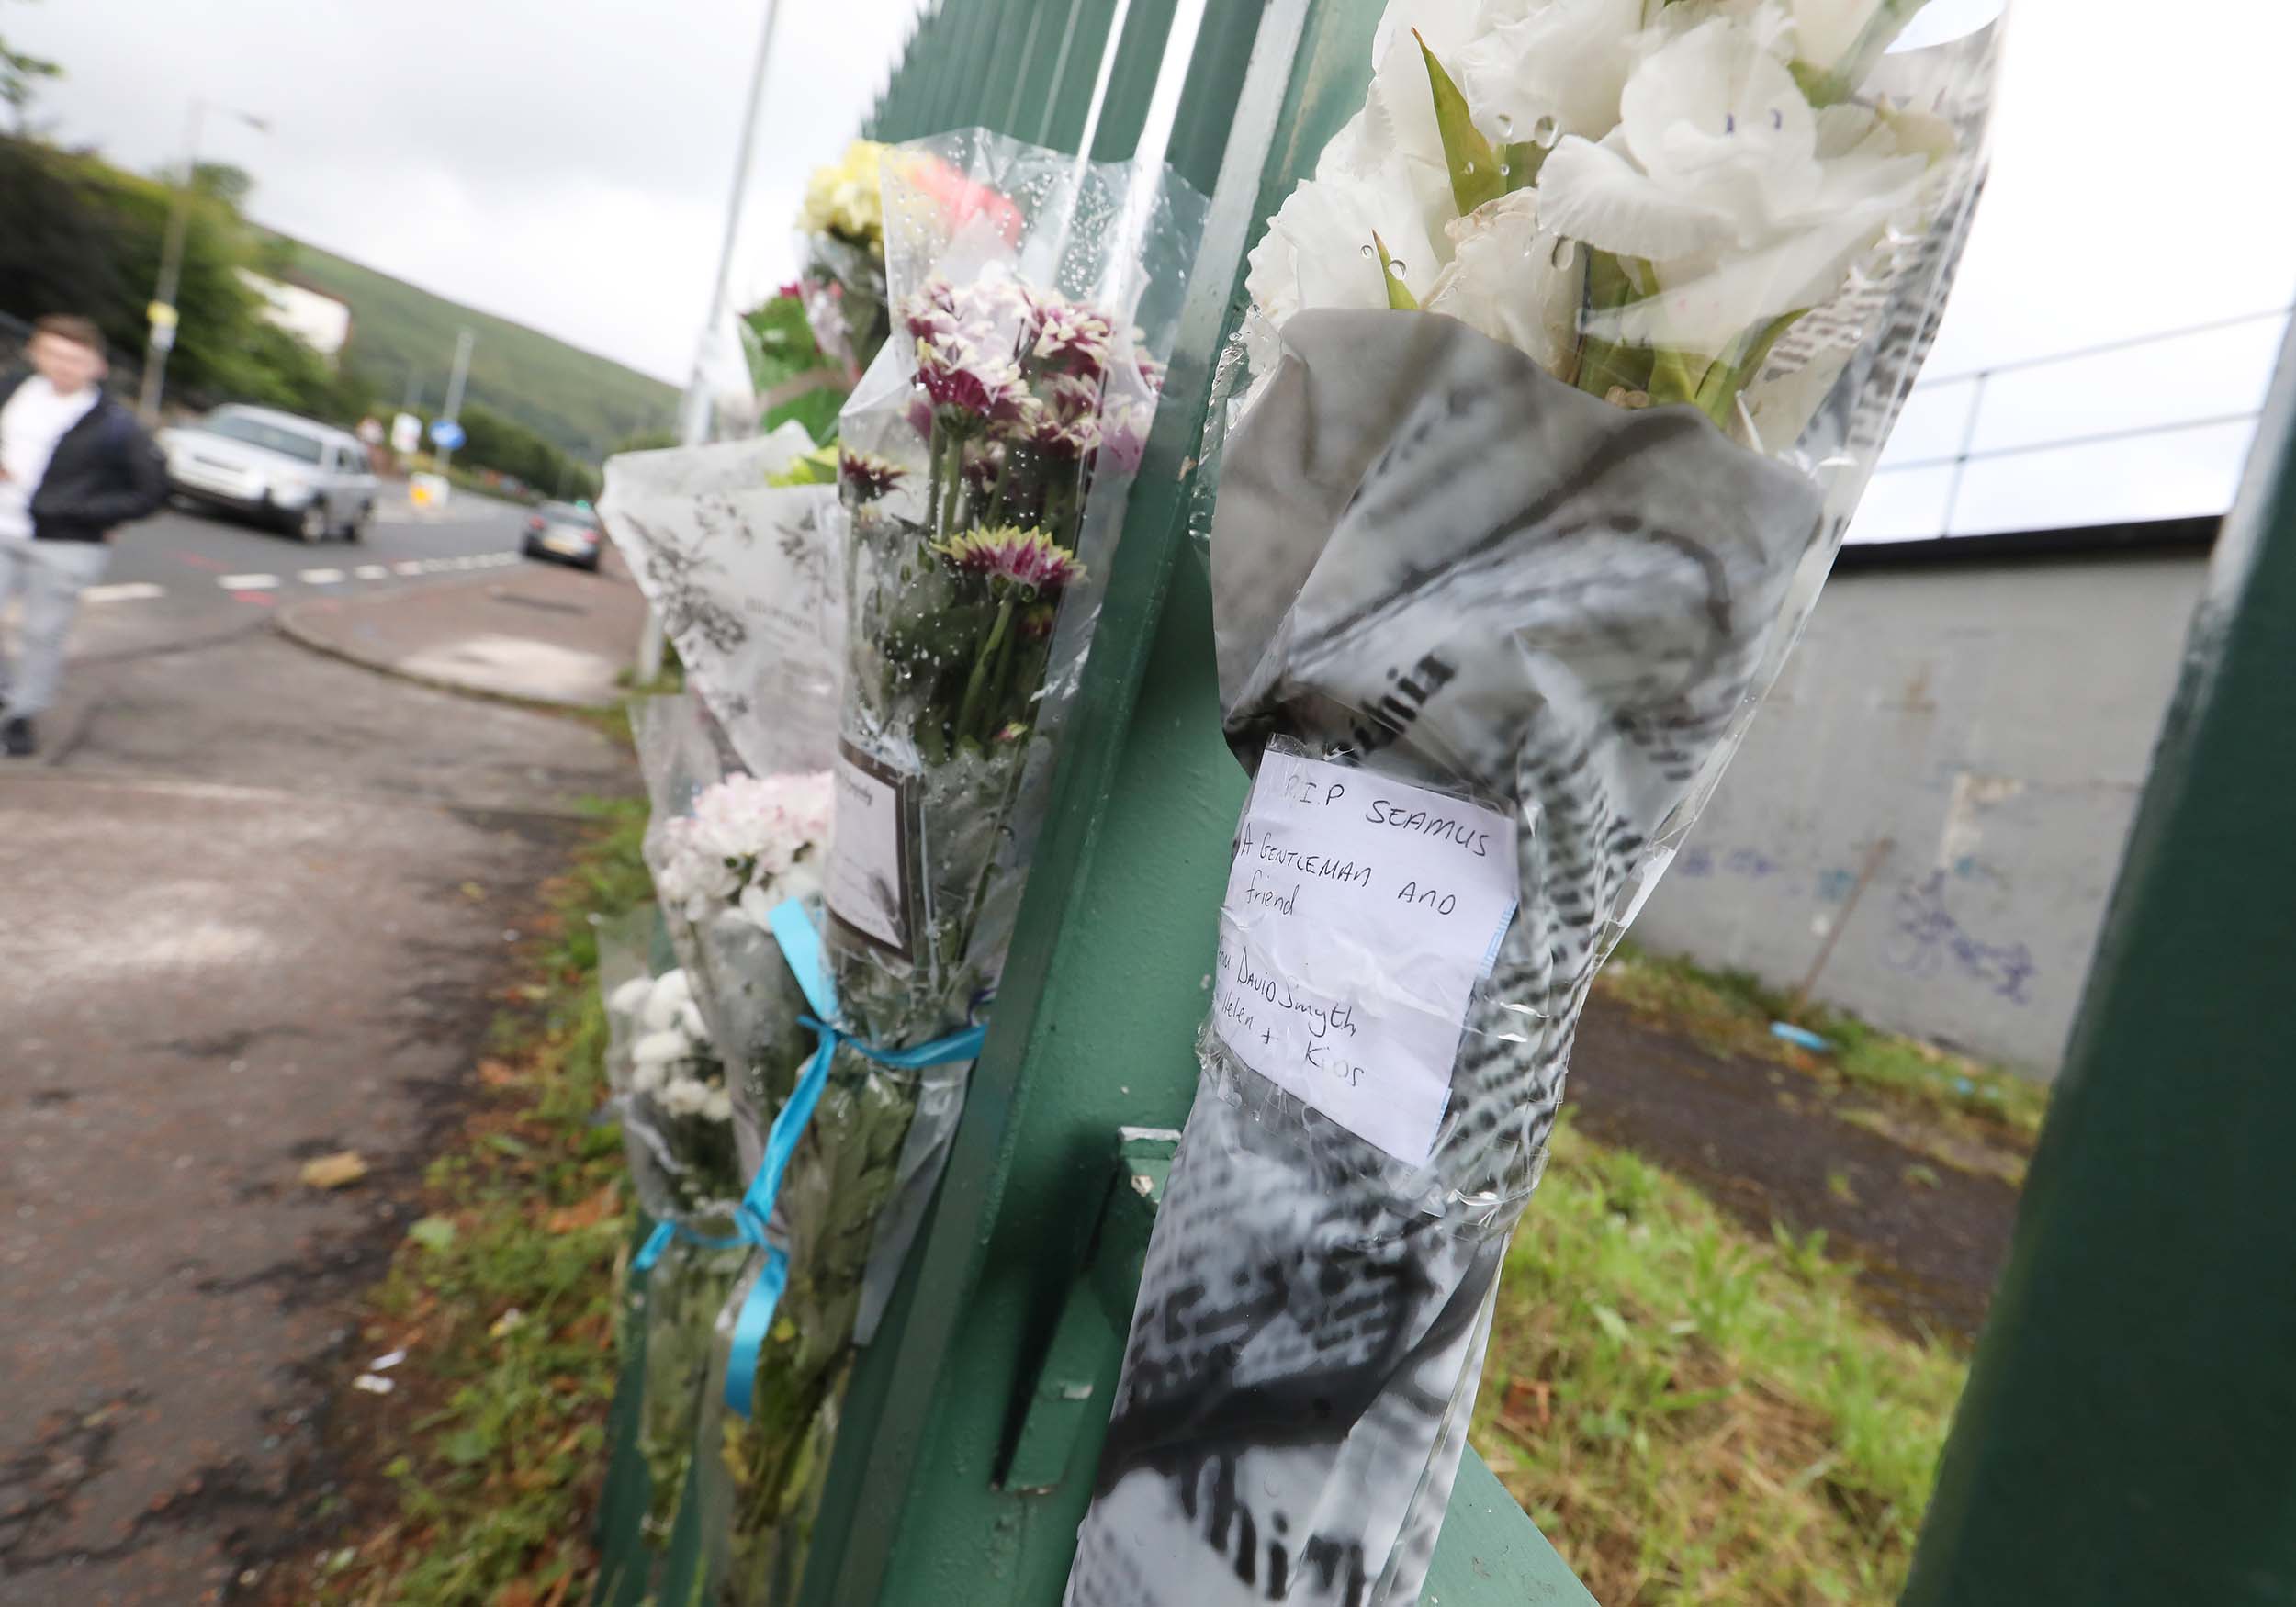 70-year-old Seamus Conlon died following a crash outside Belfast City Cemetery on Saturday